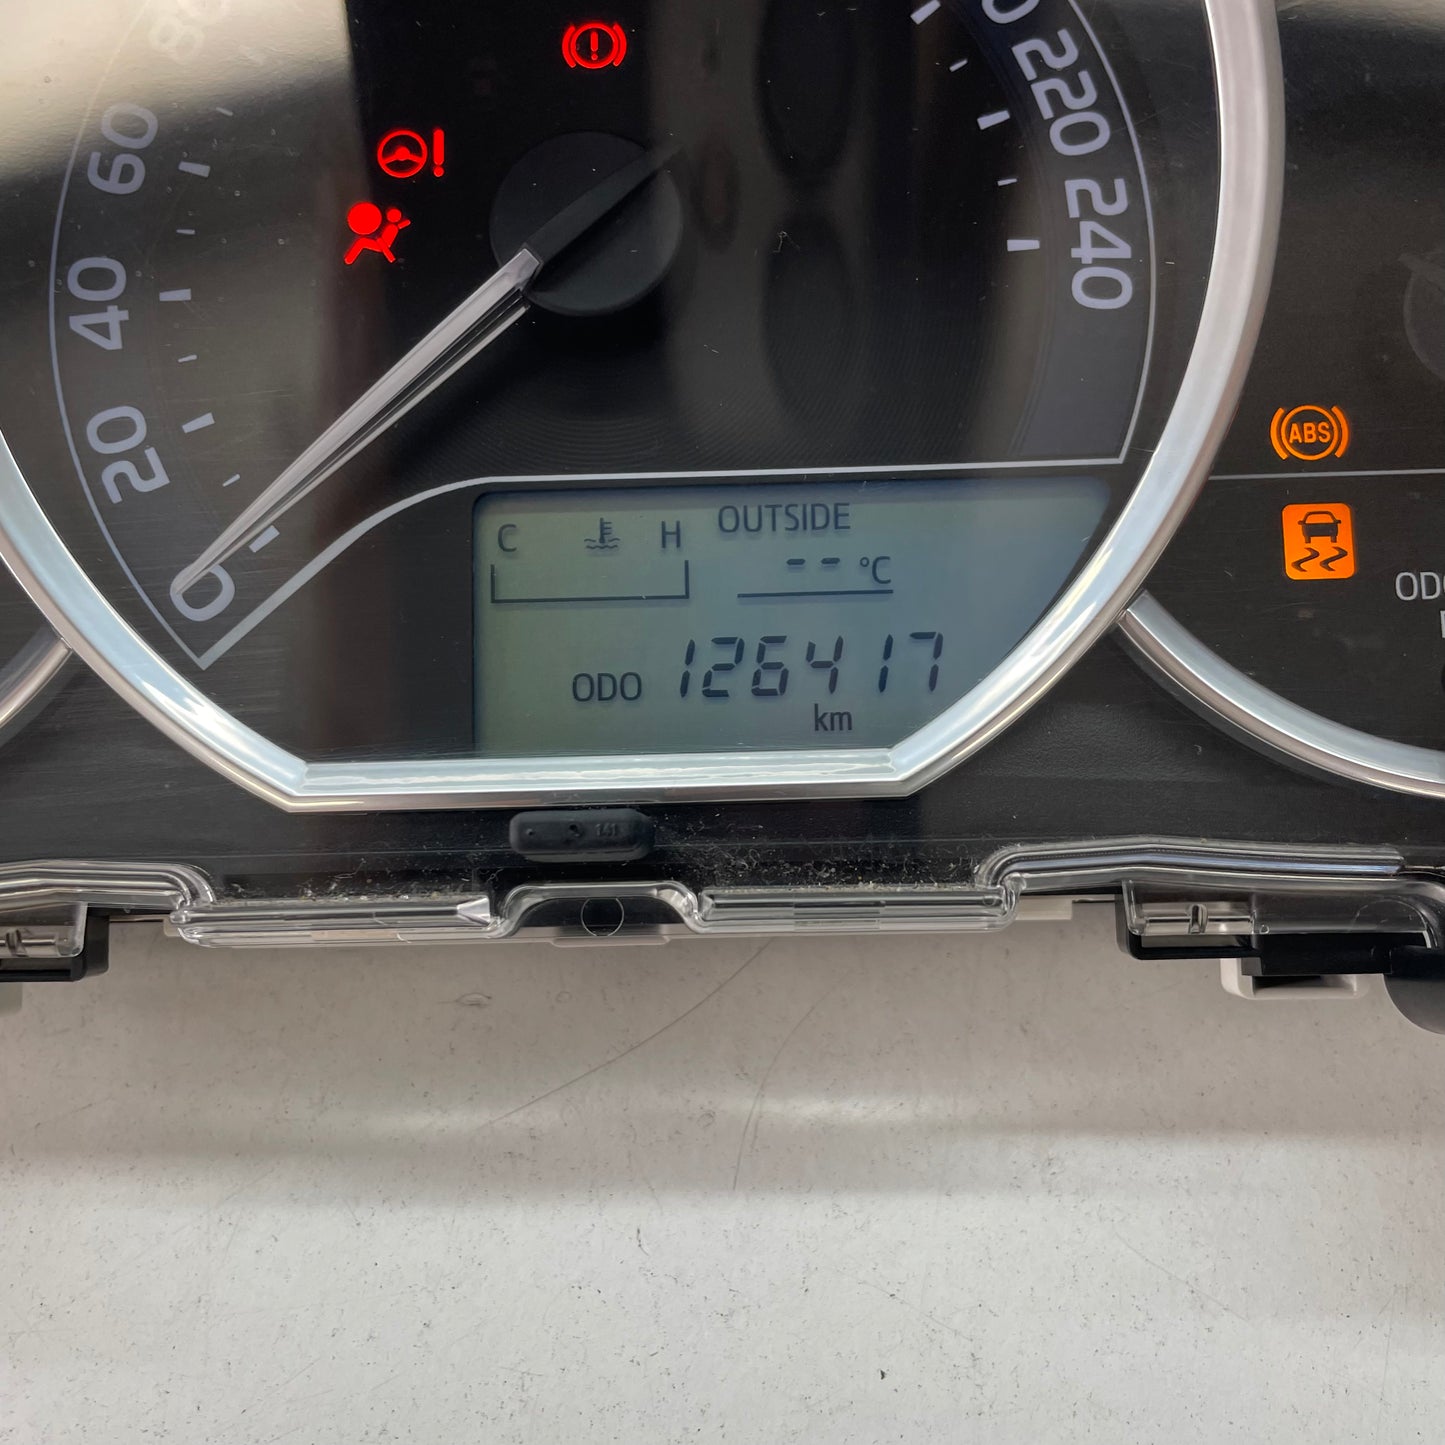 Toyota Corolla Hatchback Instrument Cluster ZRE182R 2015 2016 2017 2018 126417km